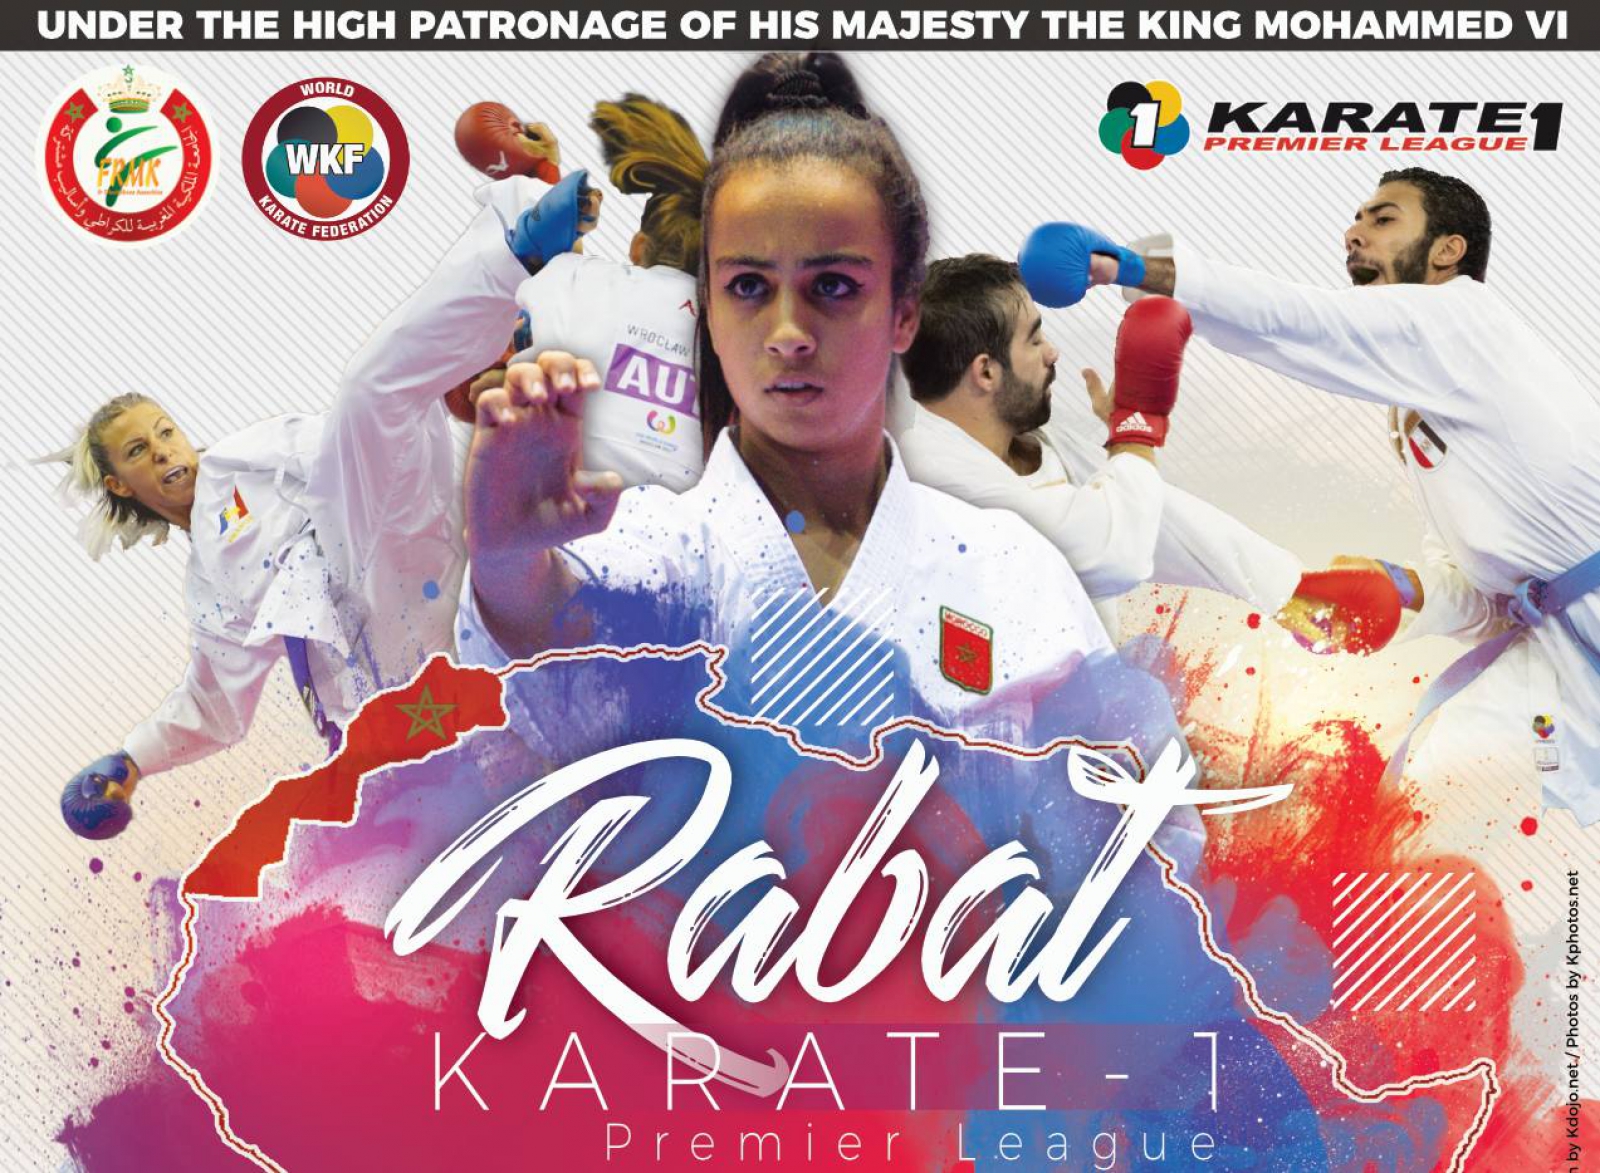 images/karate/KARATE_rabat_2018.jpg